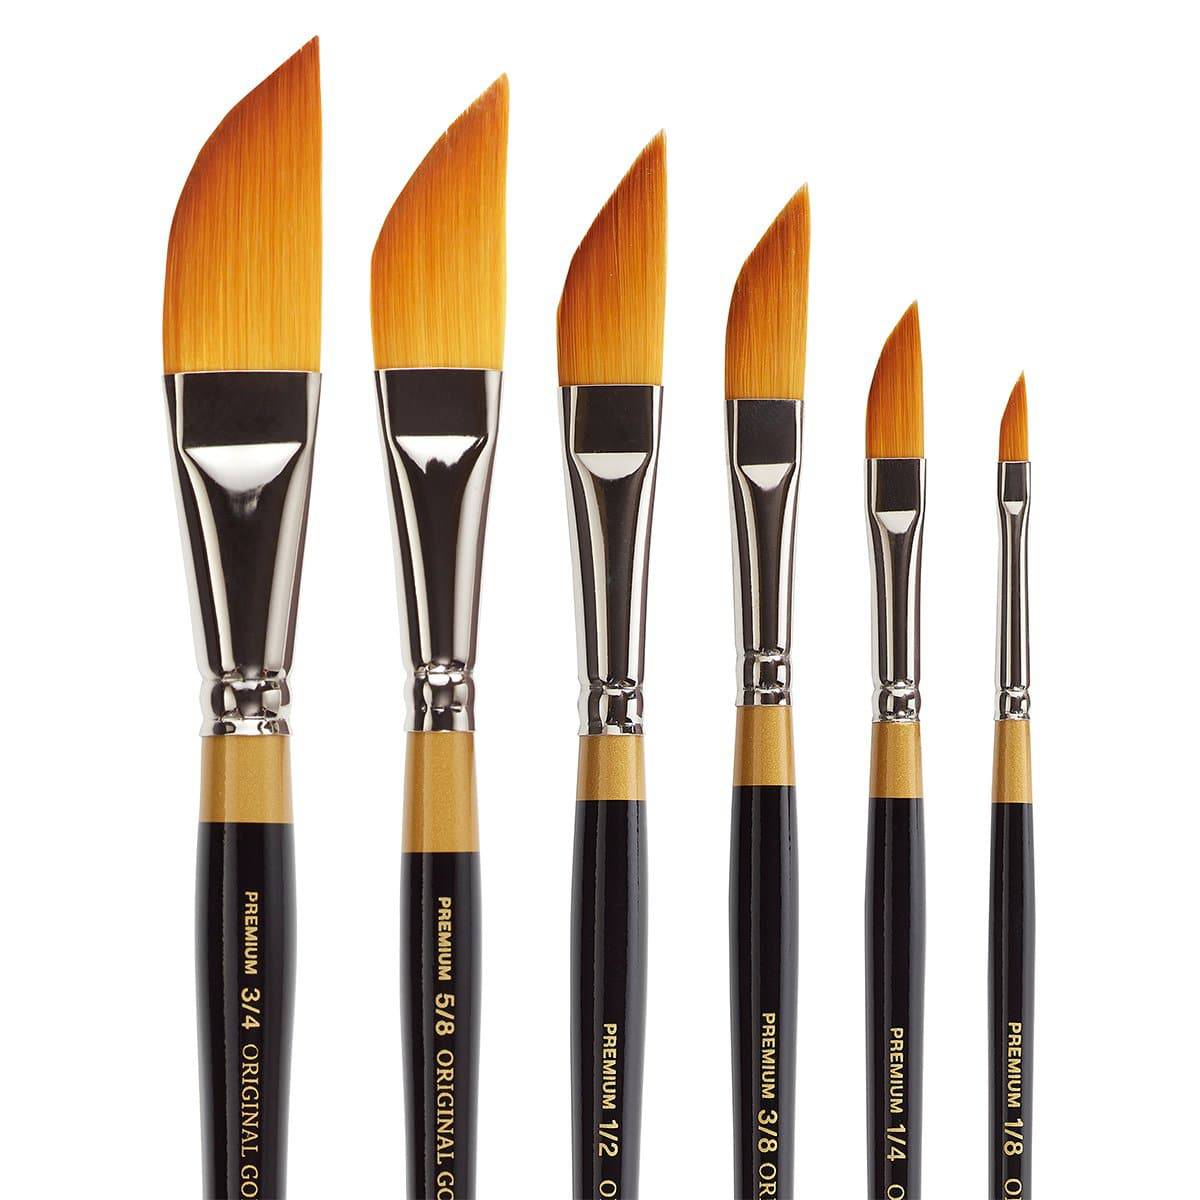  Art Paint Brushes Set 15 Size Acrylic Brushes for Painting  Contains Premium Nylon Hair and Art Knife Sponge